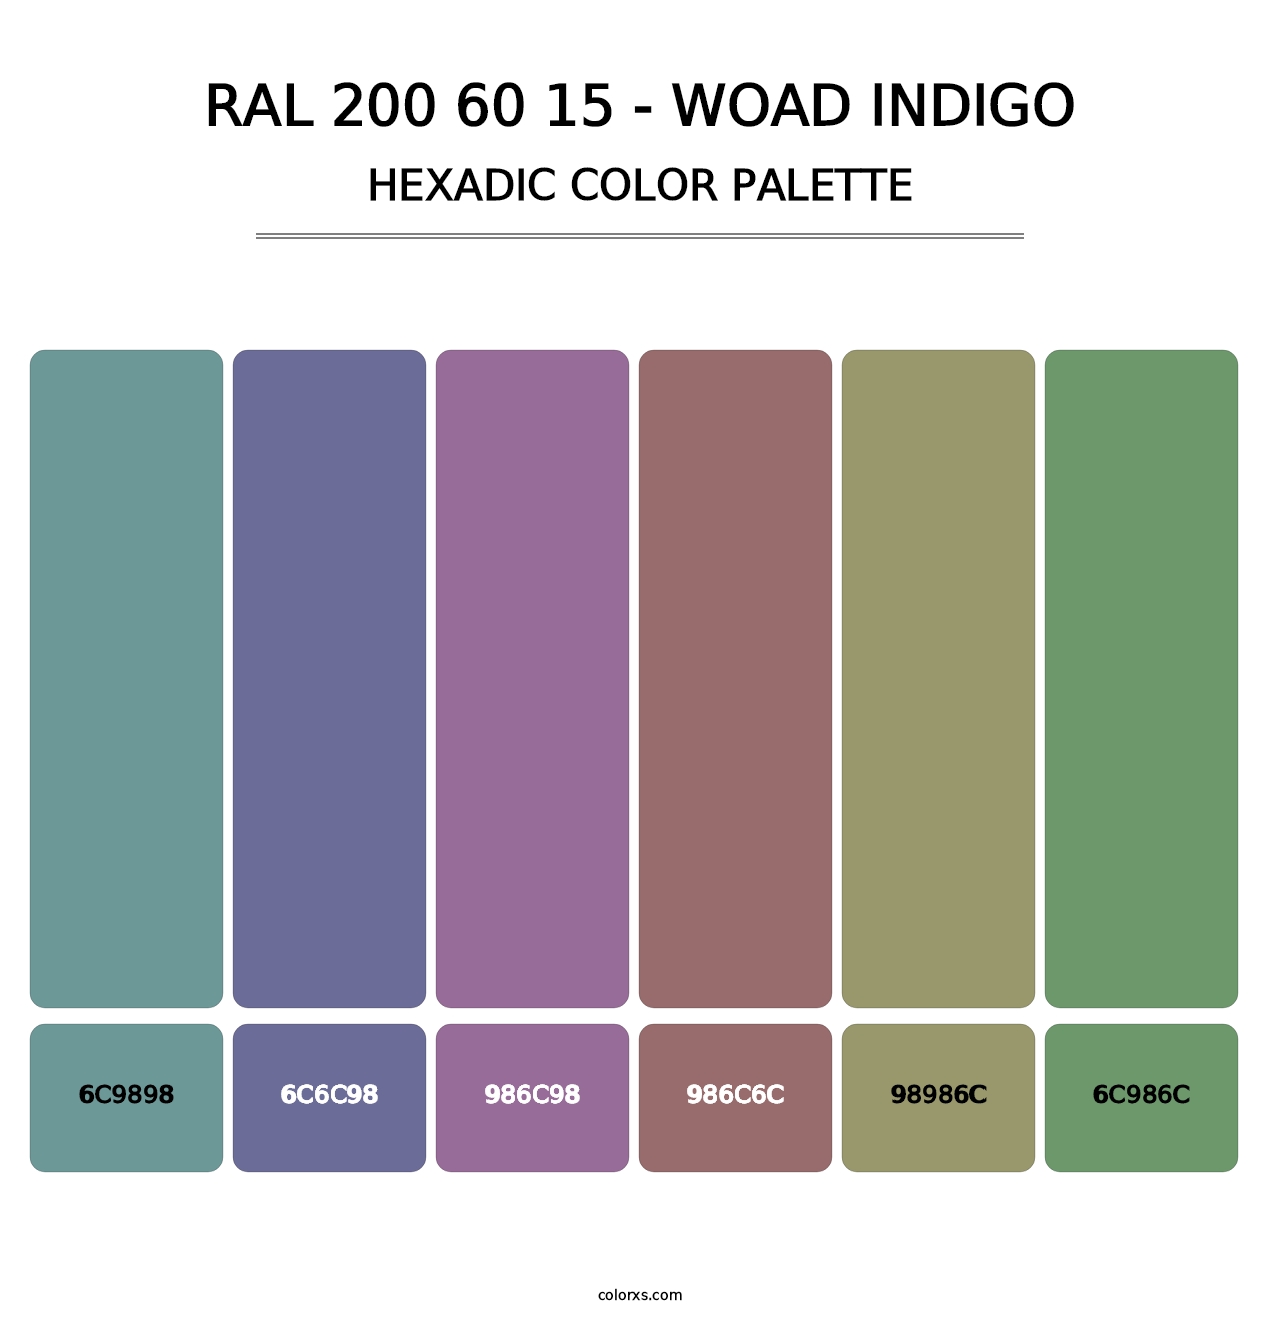 RAL 200 60 15 - Woad Indigo - Hexadic Color Palette